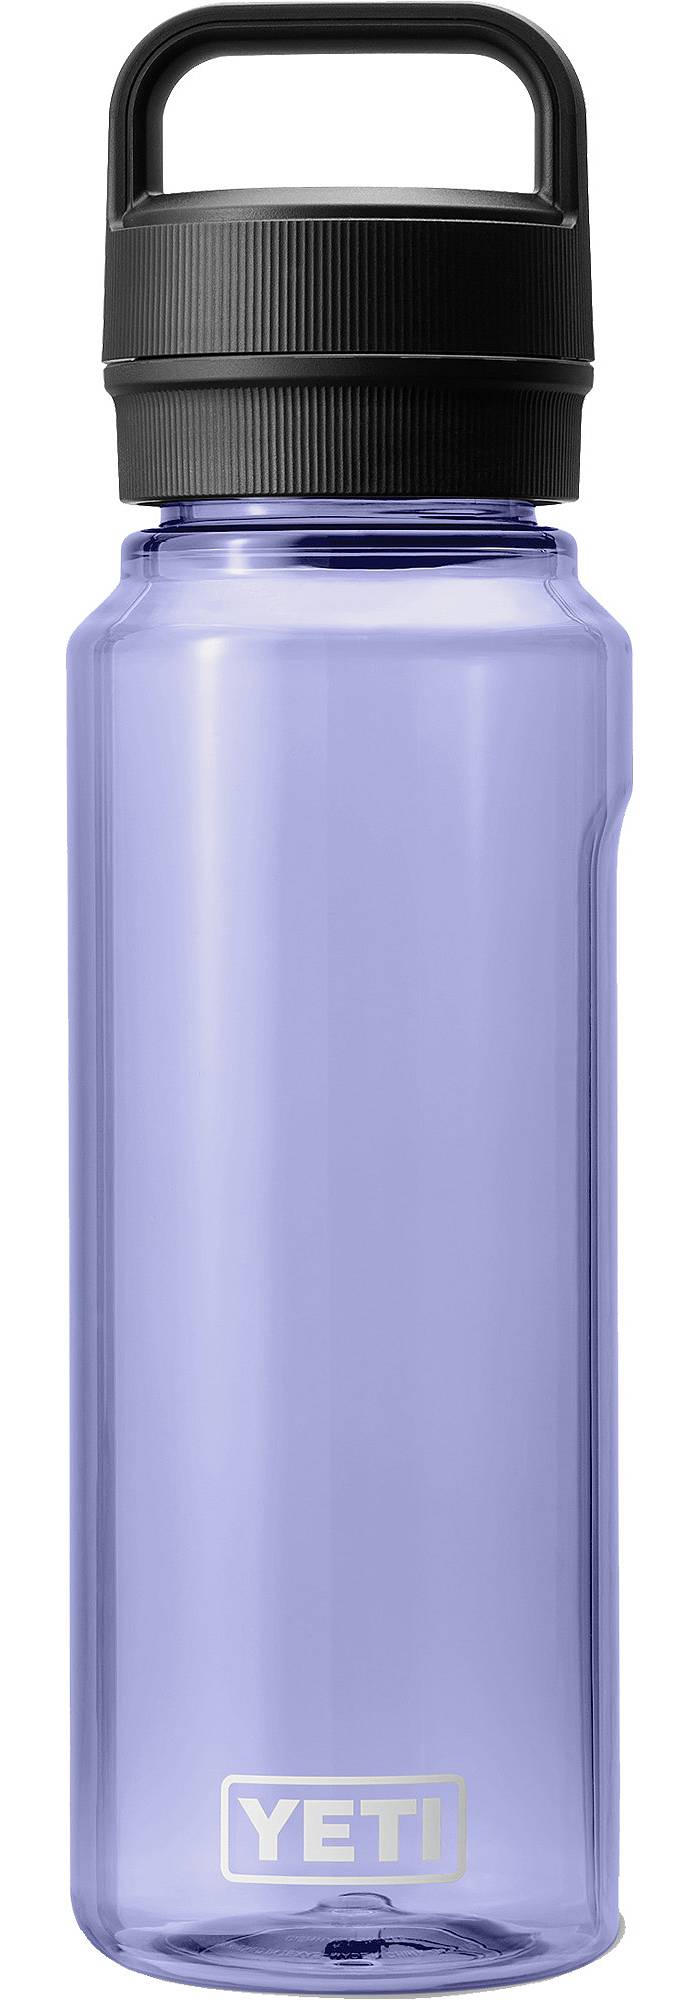 Yonder 1L / 34oz Water Bottle - Cosmic Lilac